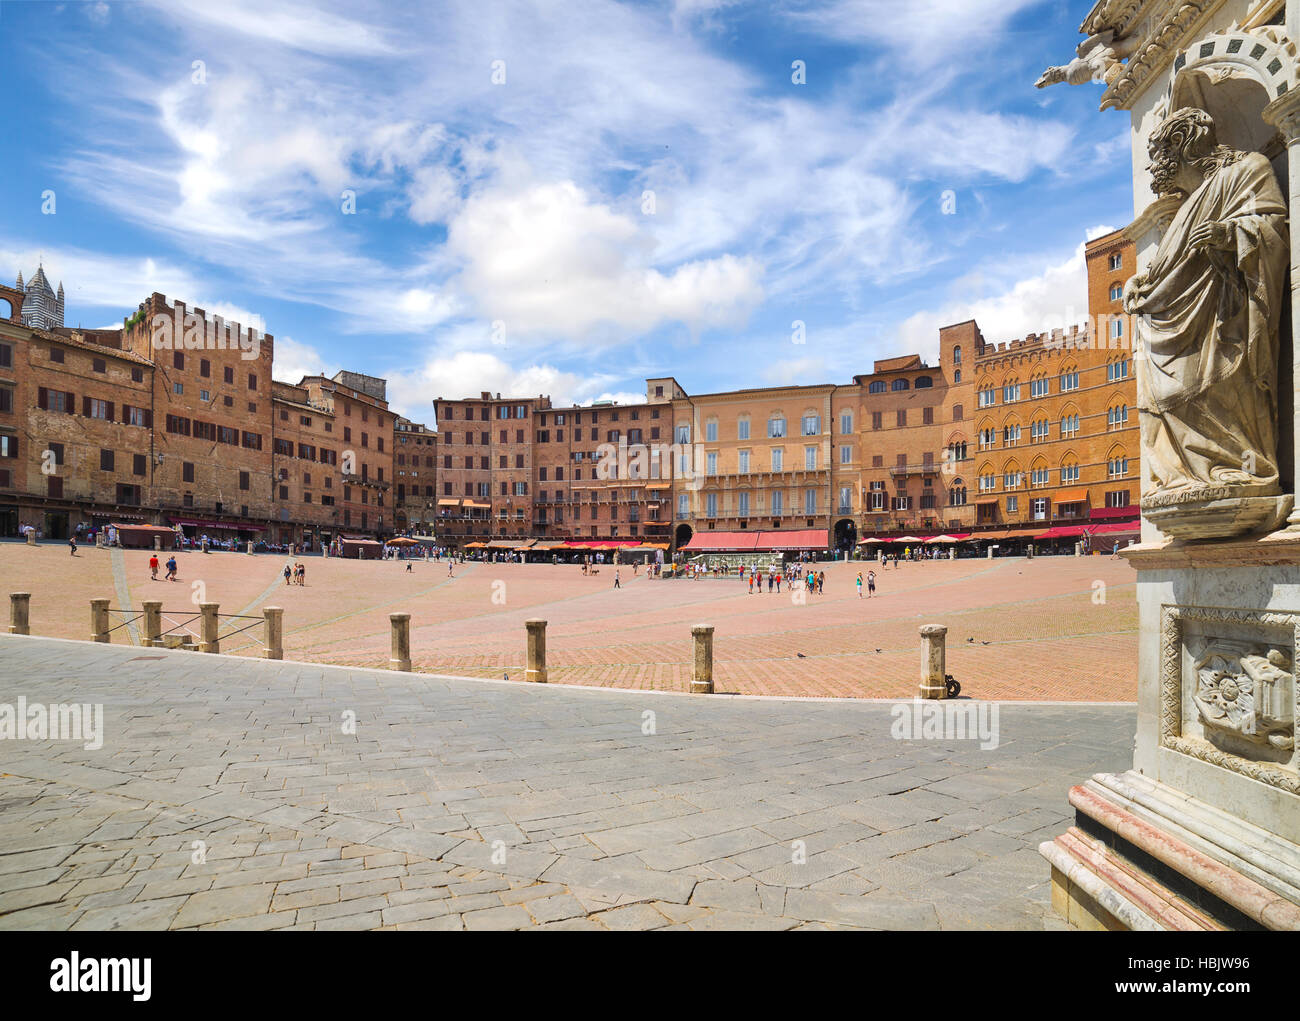 Plaza Central de Siena, Italia Foto de stock